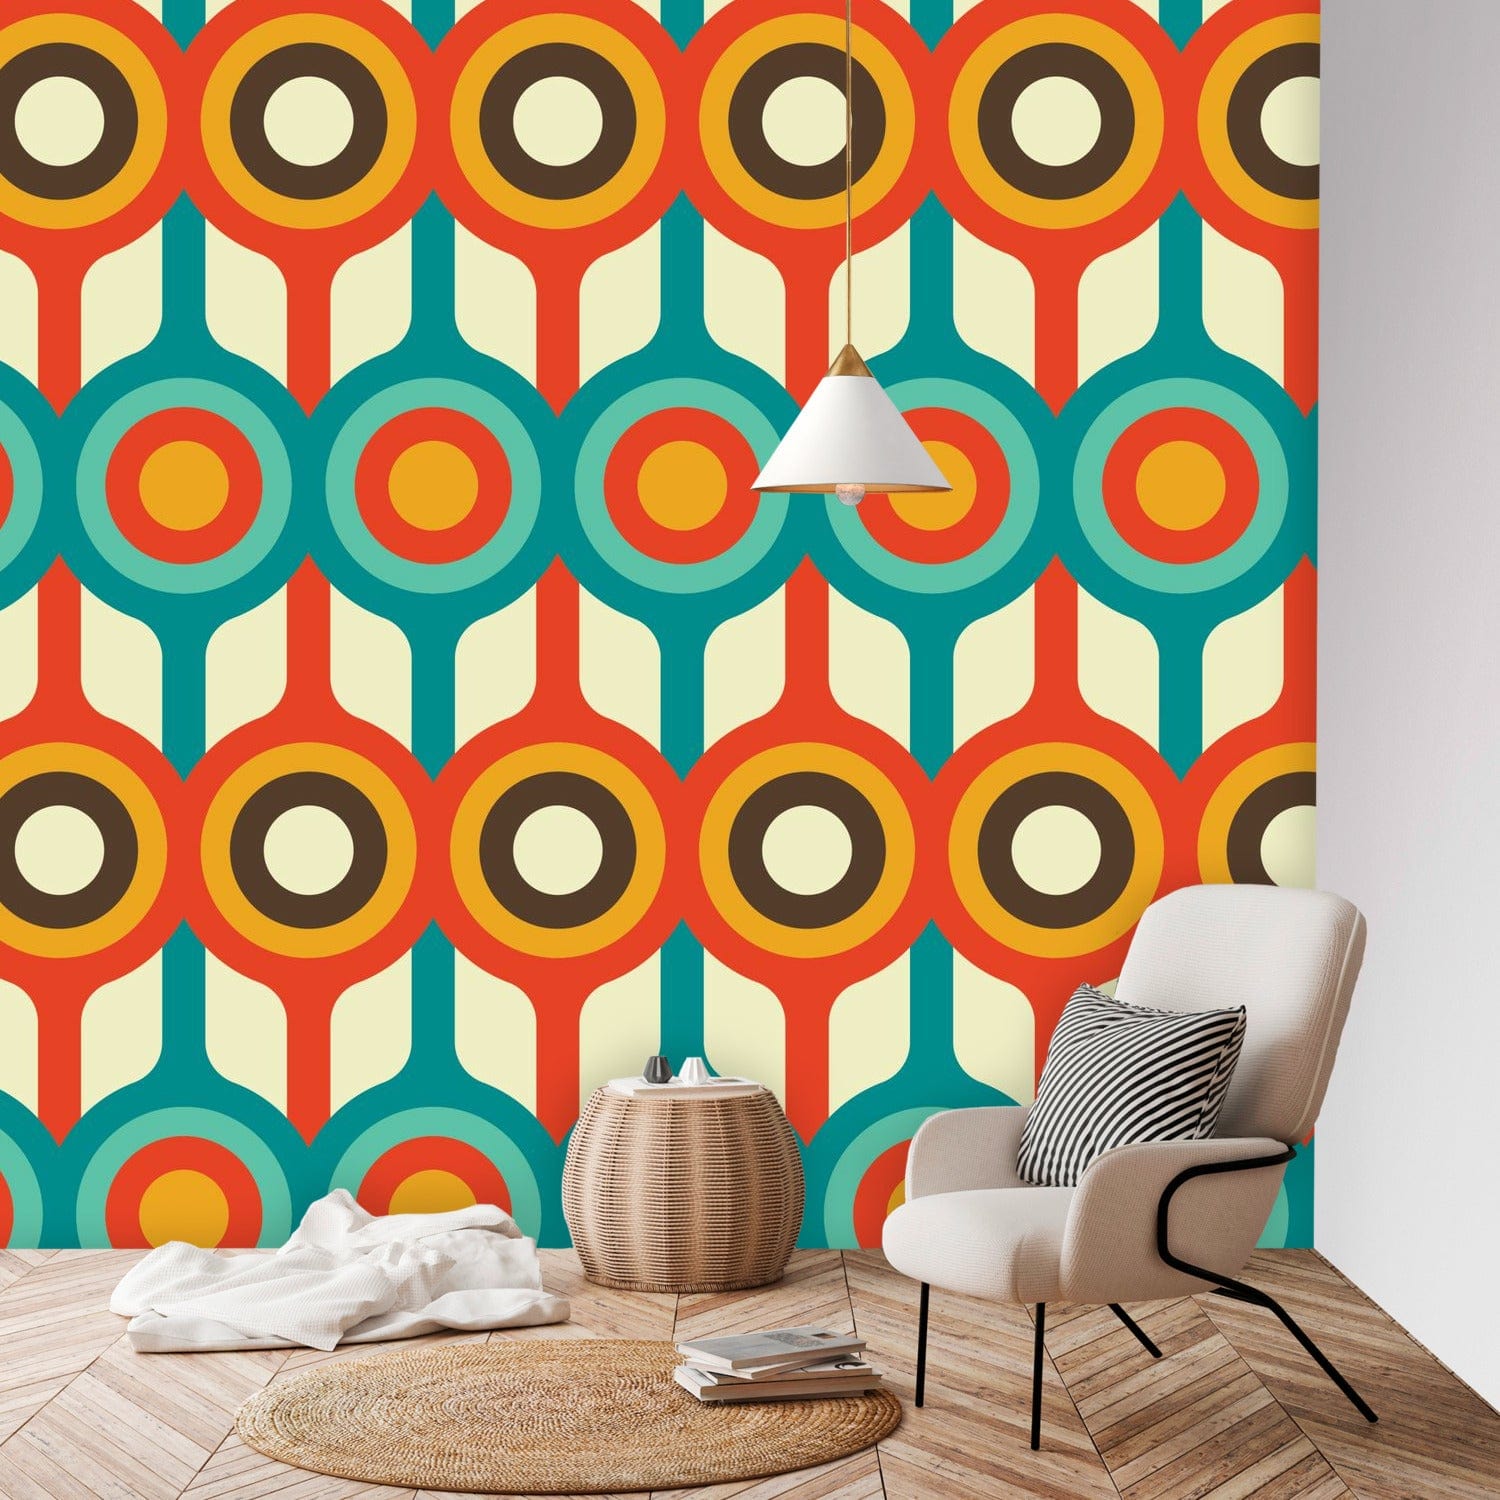 Mid Century Modern, Retro Groovy, Orange, Brown, Teal, Cream, Geometric Peel And Stick Wall Murals Wallpaper H96 x W100